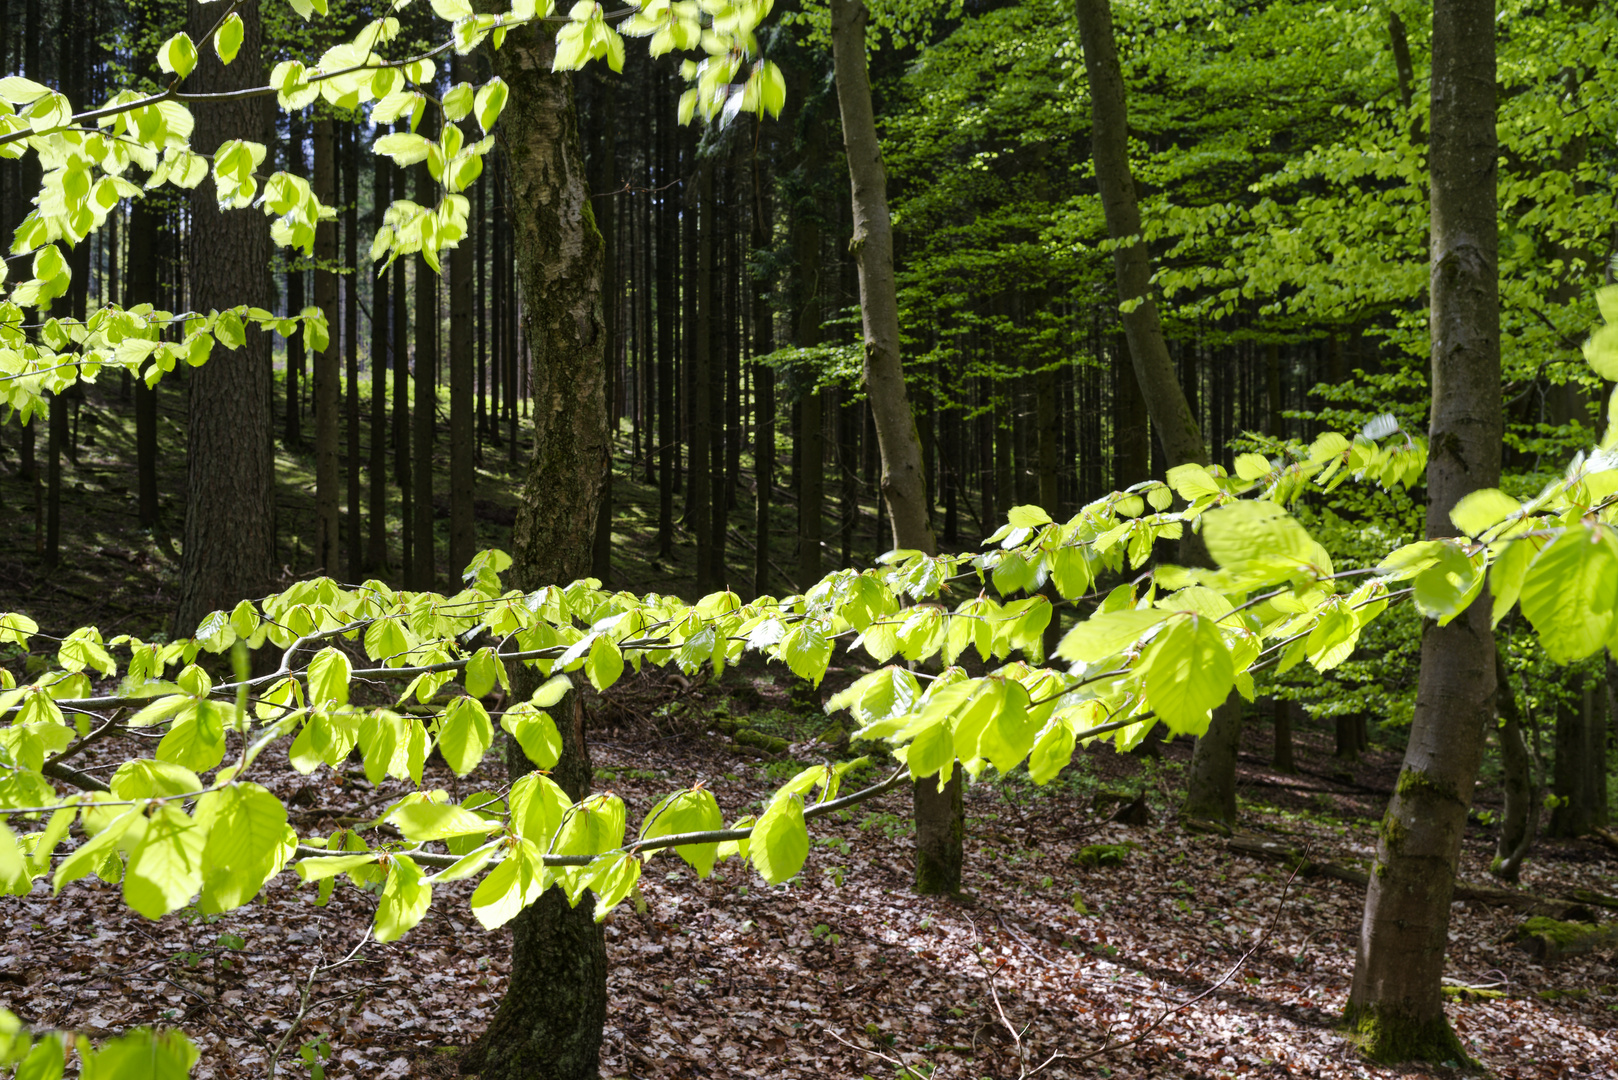 Waldmotive, hier: Frühlingsblätter im Licht